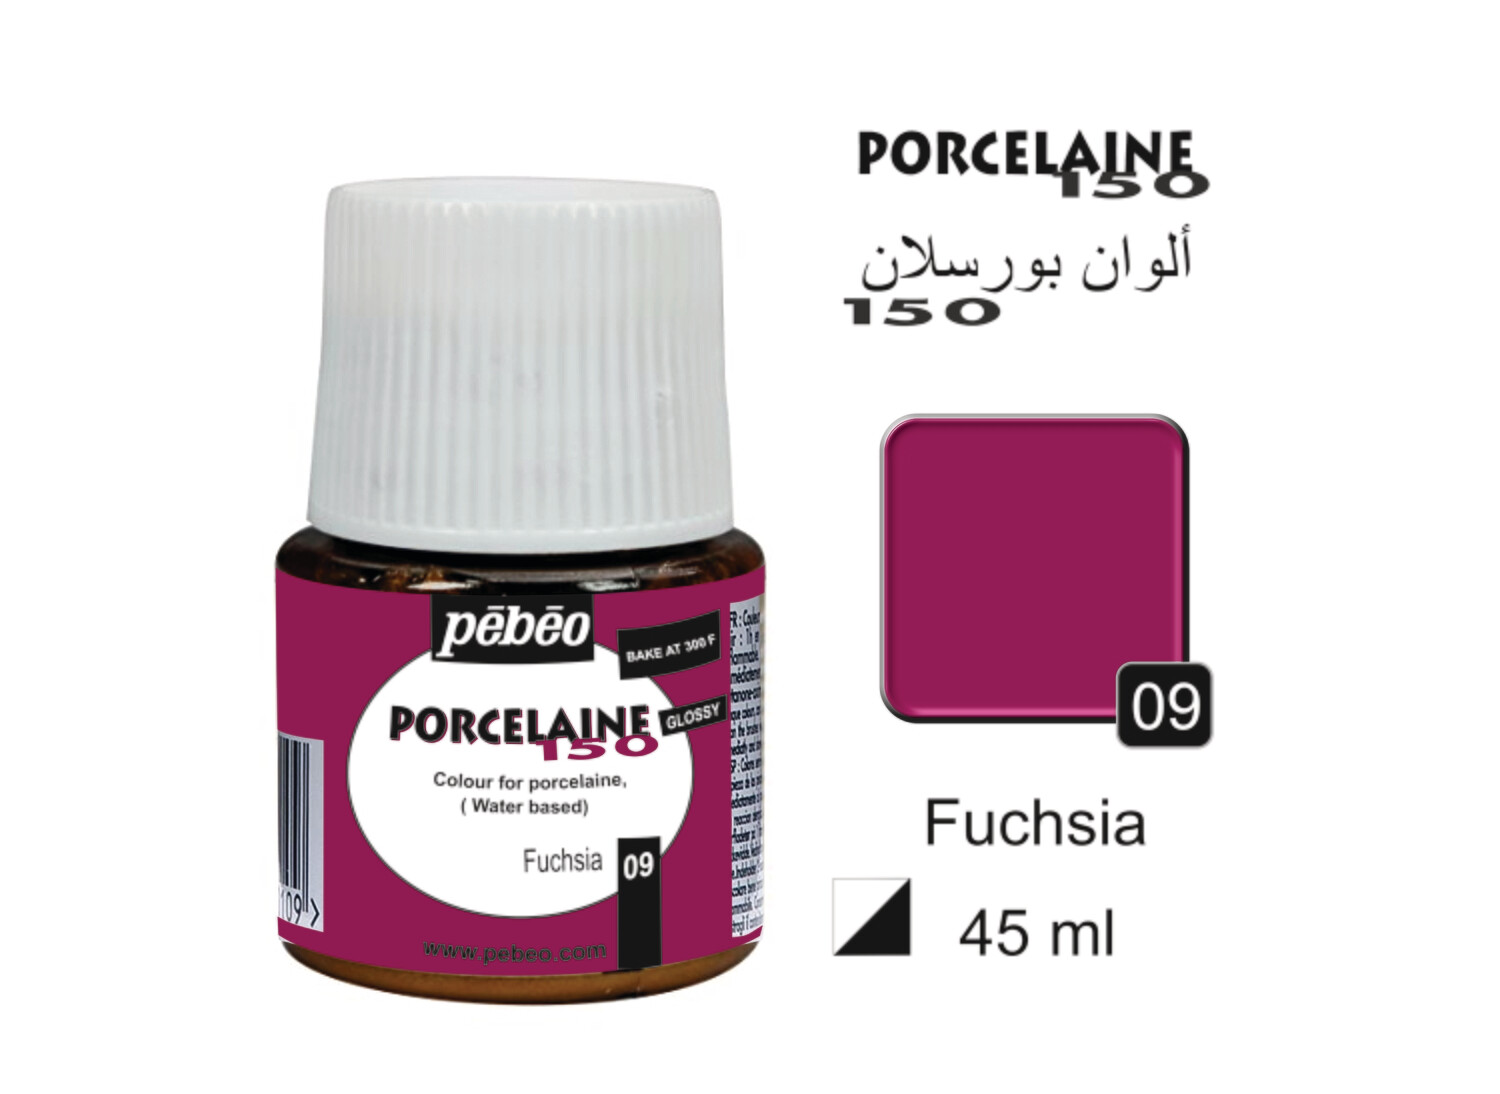 PORCELAINE 150, GLOSS 45 ml, Fuchsia No. 09